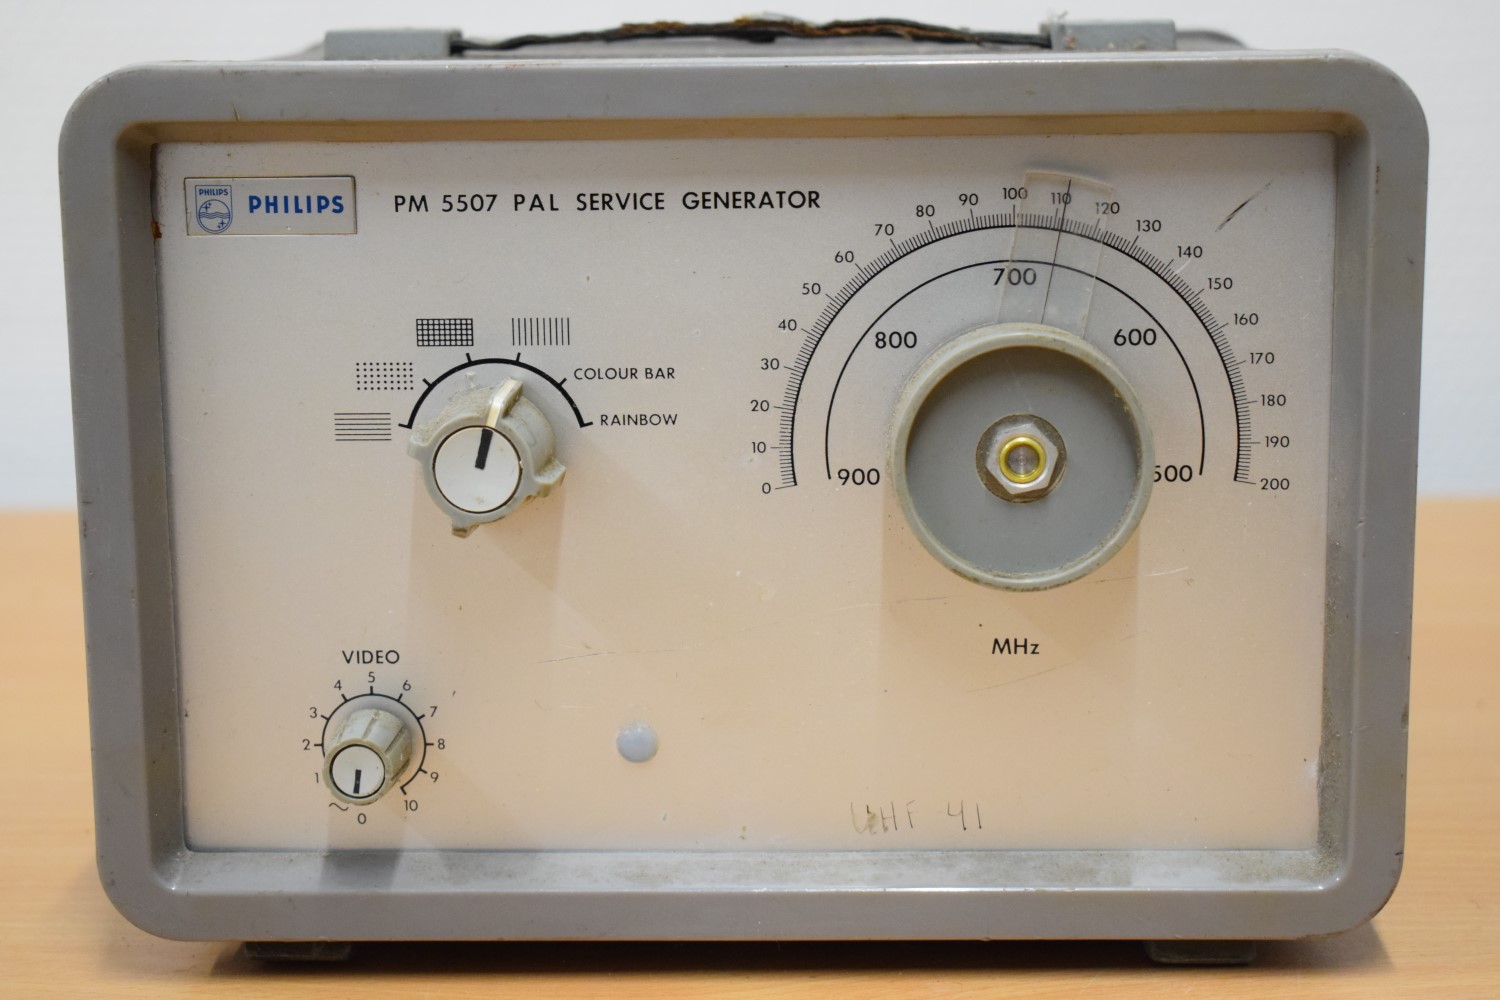 Philips PM 5507 PAL Service Generator